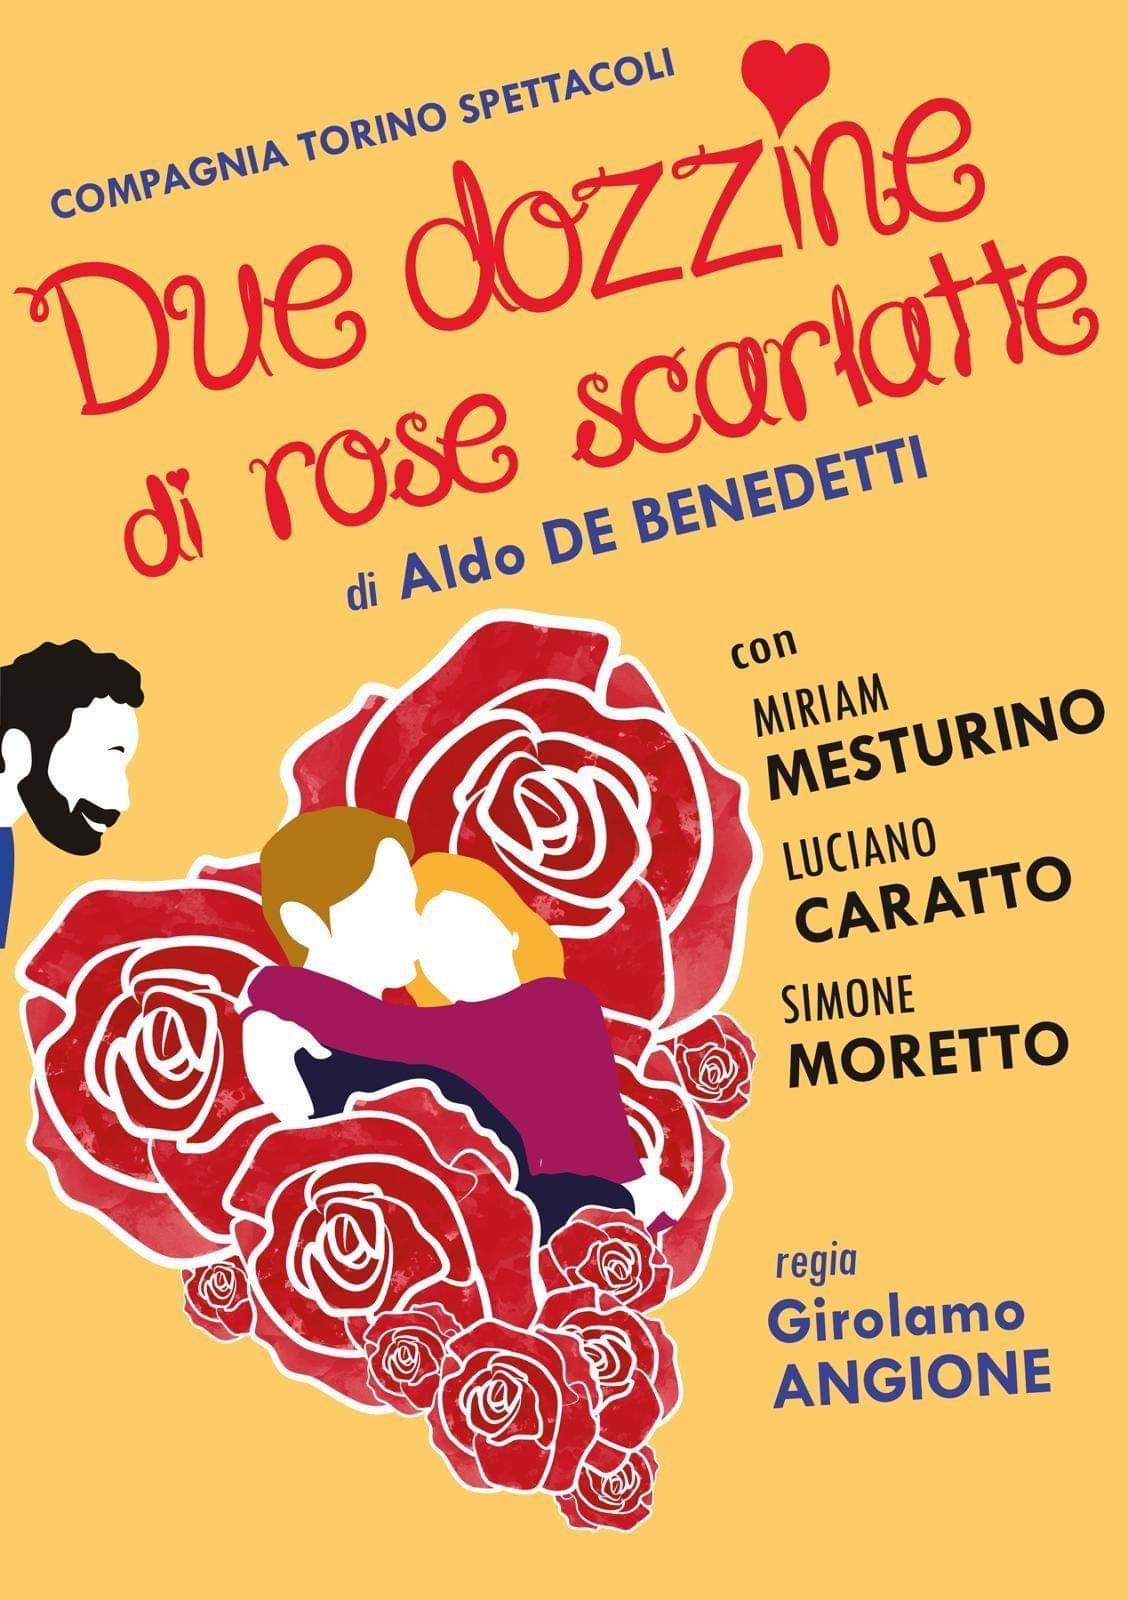 Miriam Mesturino Manifesto Due dozzine di rose scarlatte